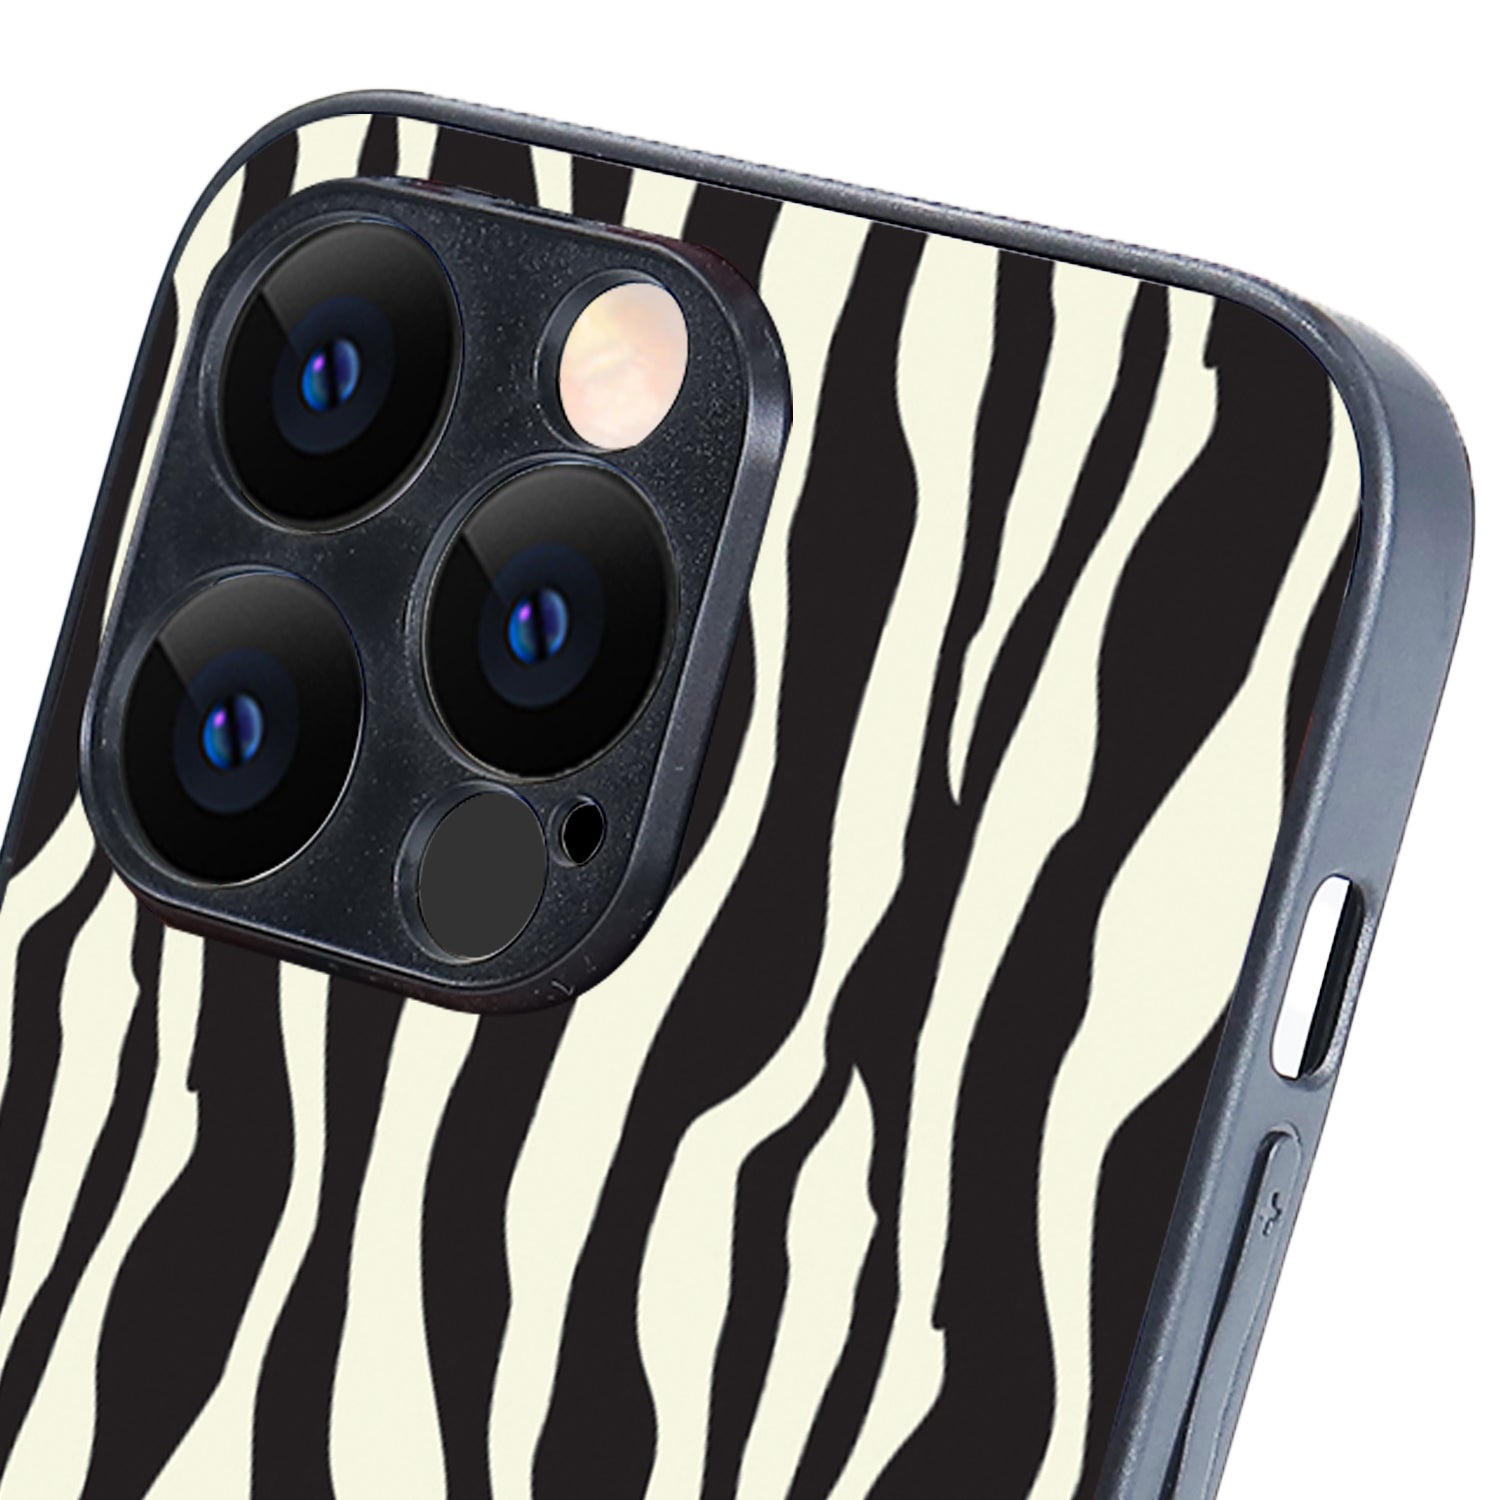 Zebra Animal Print iPhone 14 Pro Max Case